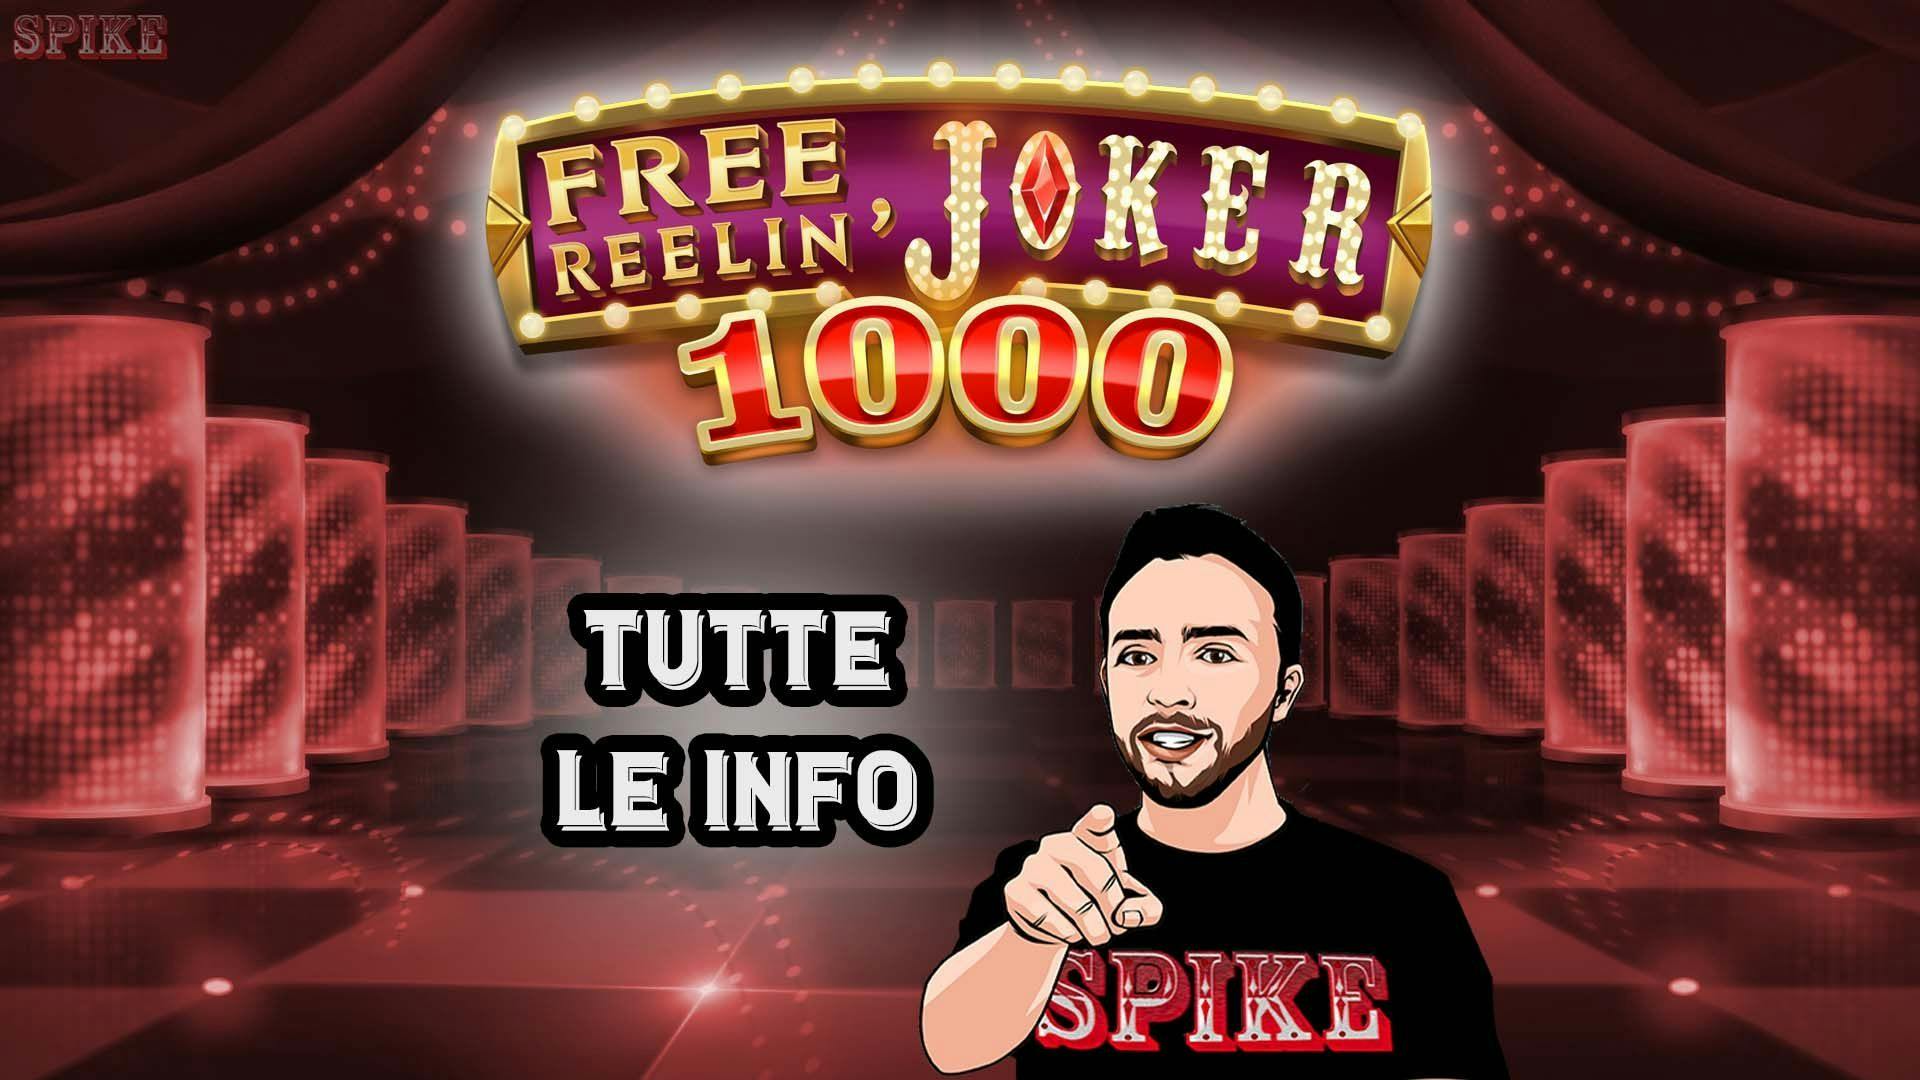 Free Reelin' Joker 1000 Slot